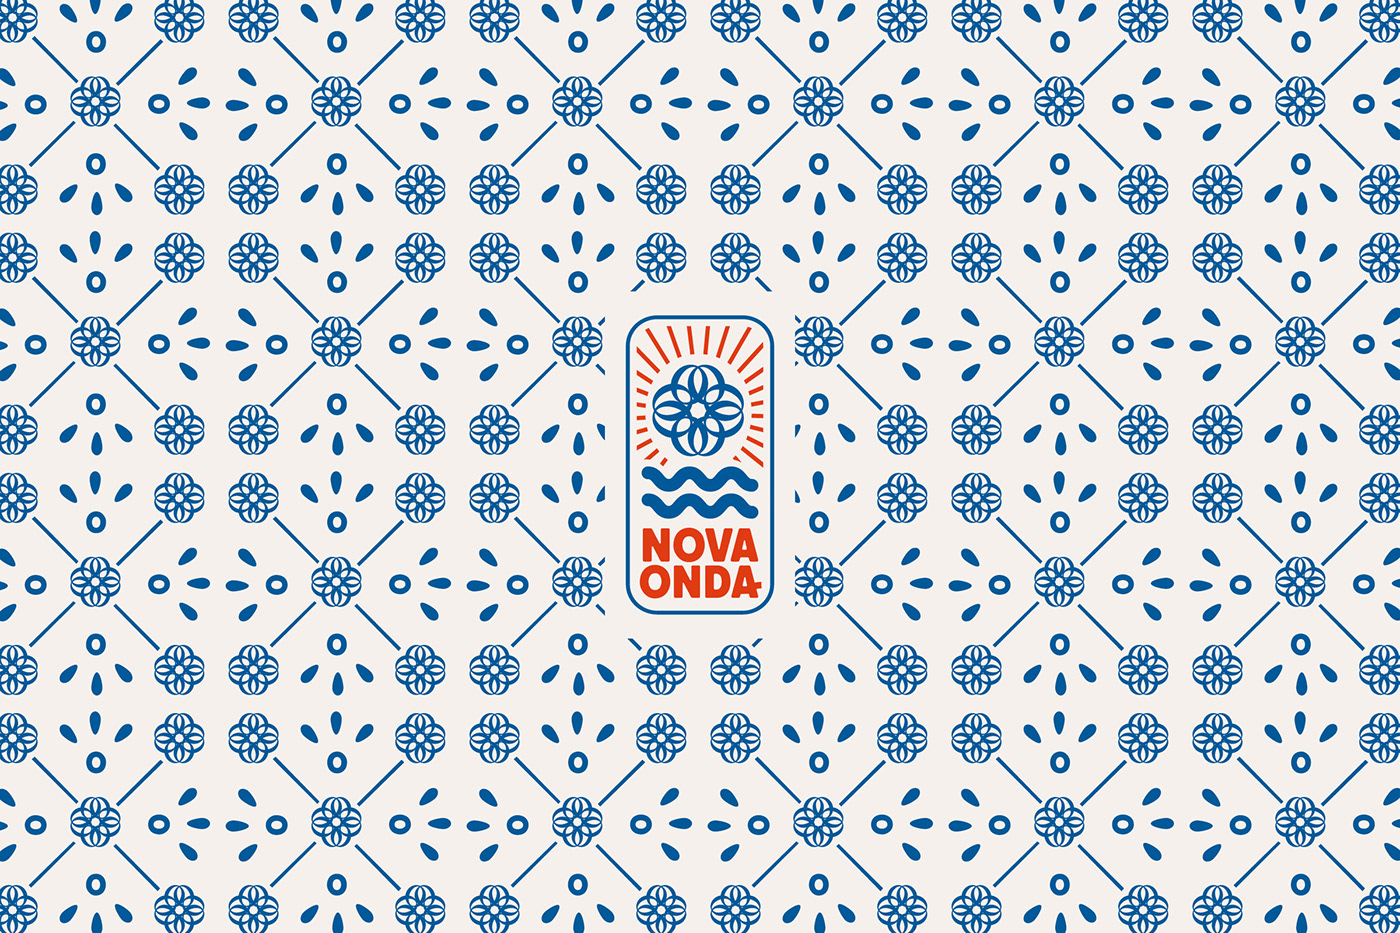 le drapeau Nova Onda sur un pattern d'azulejo